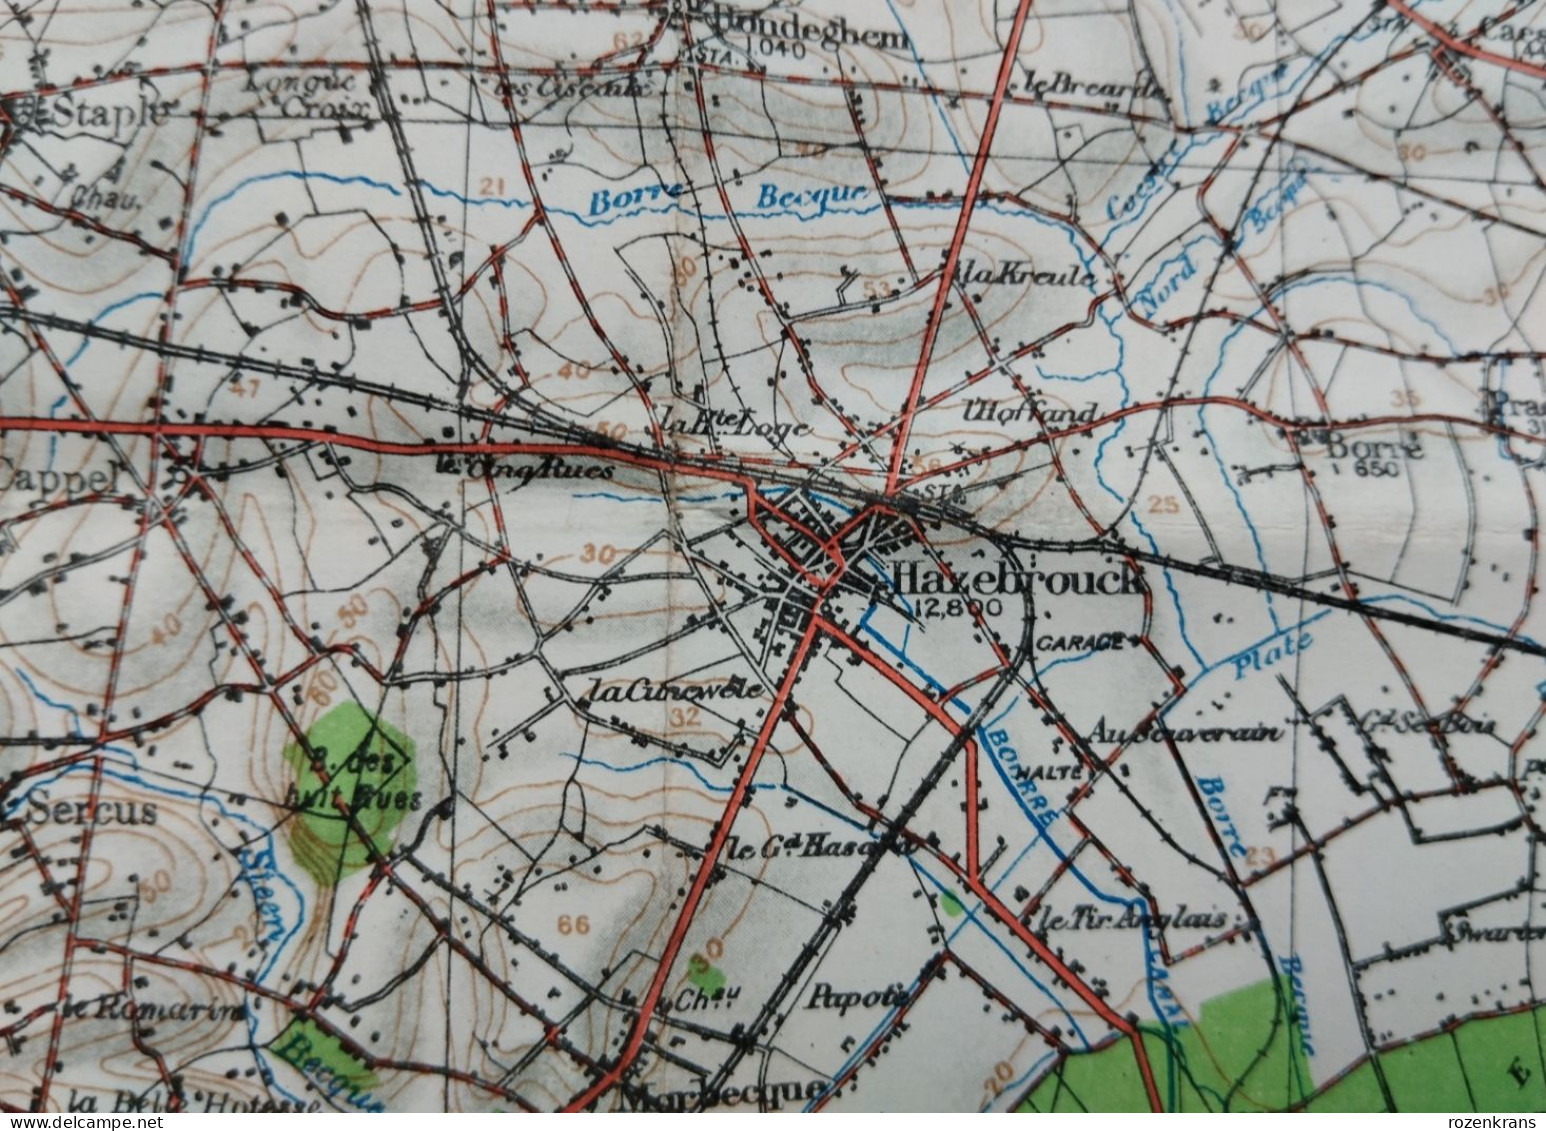 Carte Topographique Militaire UK War Office 1917 World War 1 WW1 Hazebrouck Ieper Poperinge Armentieres Cassel Kemmel